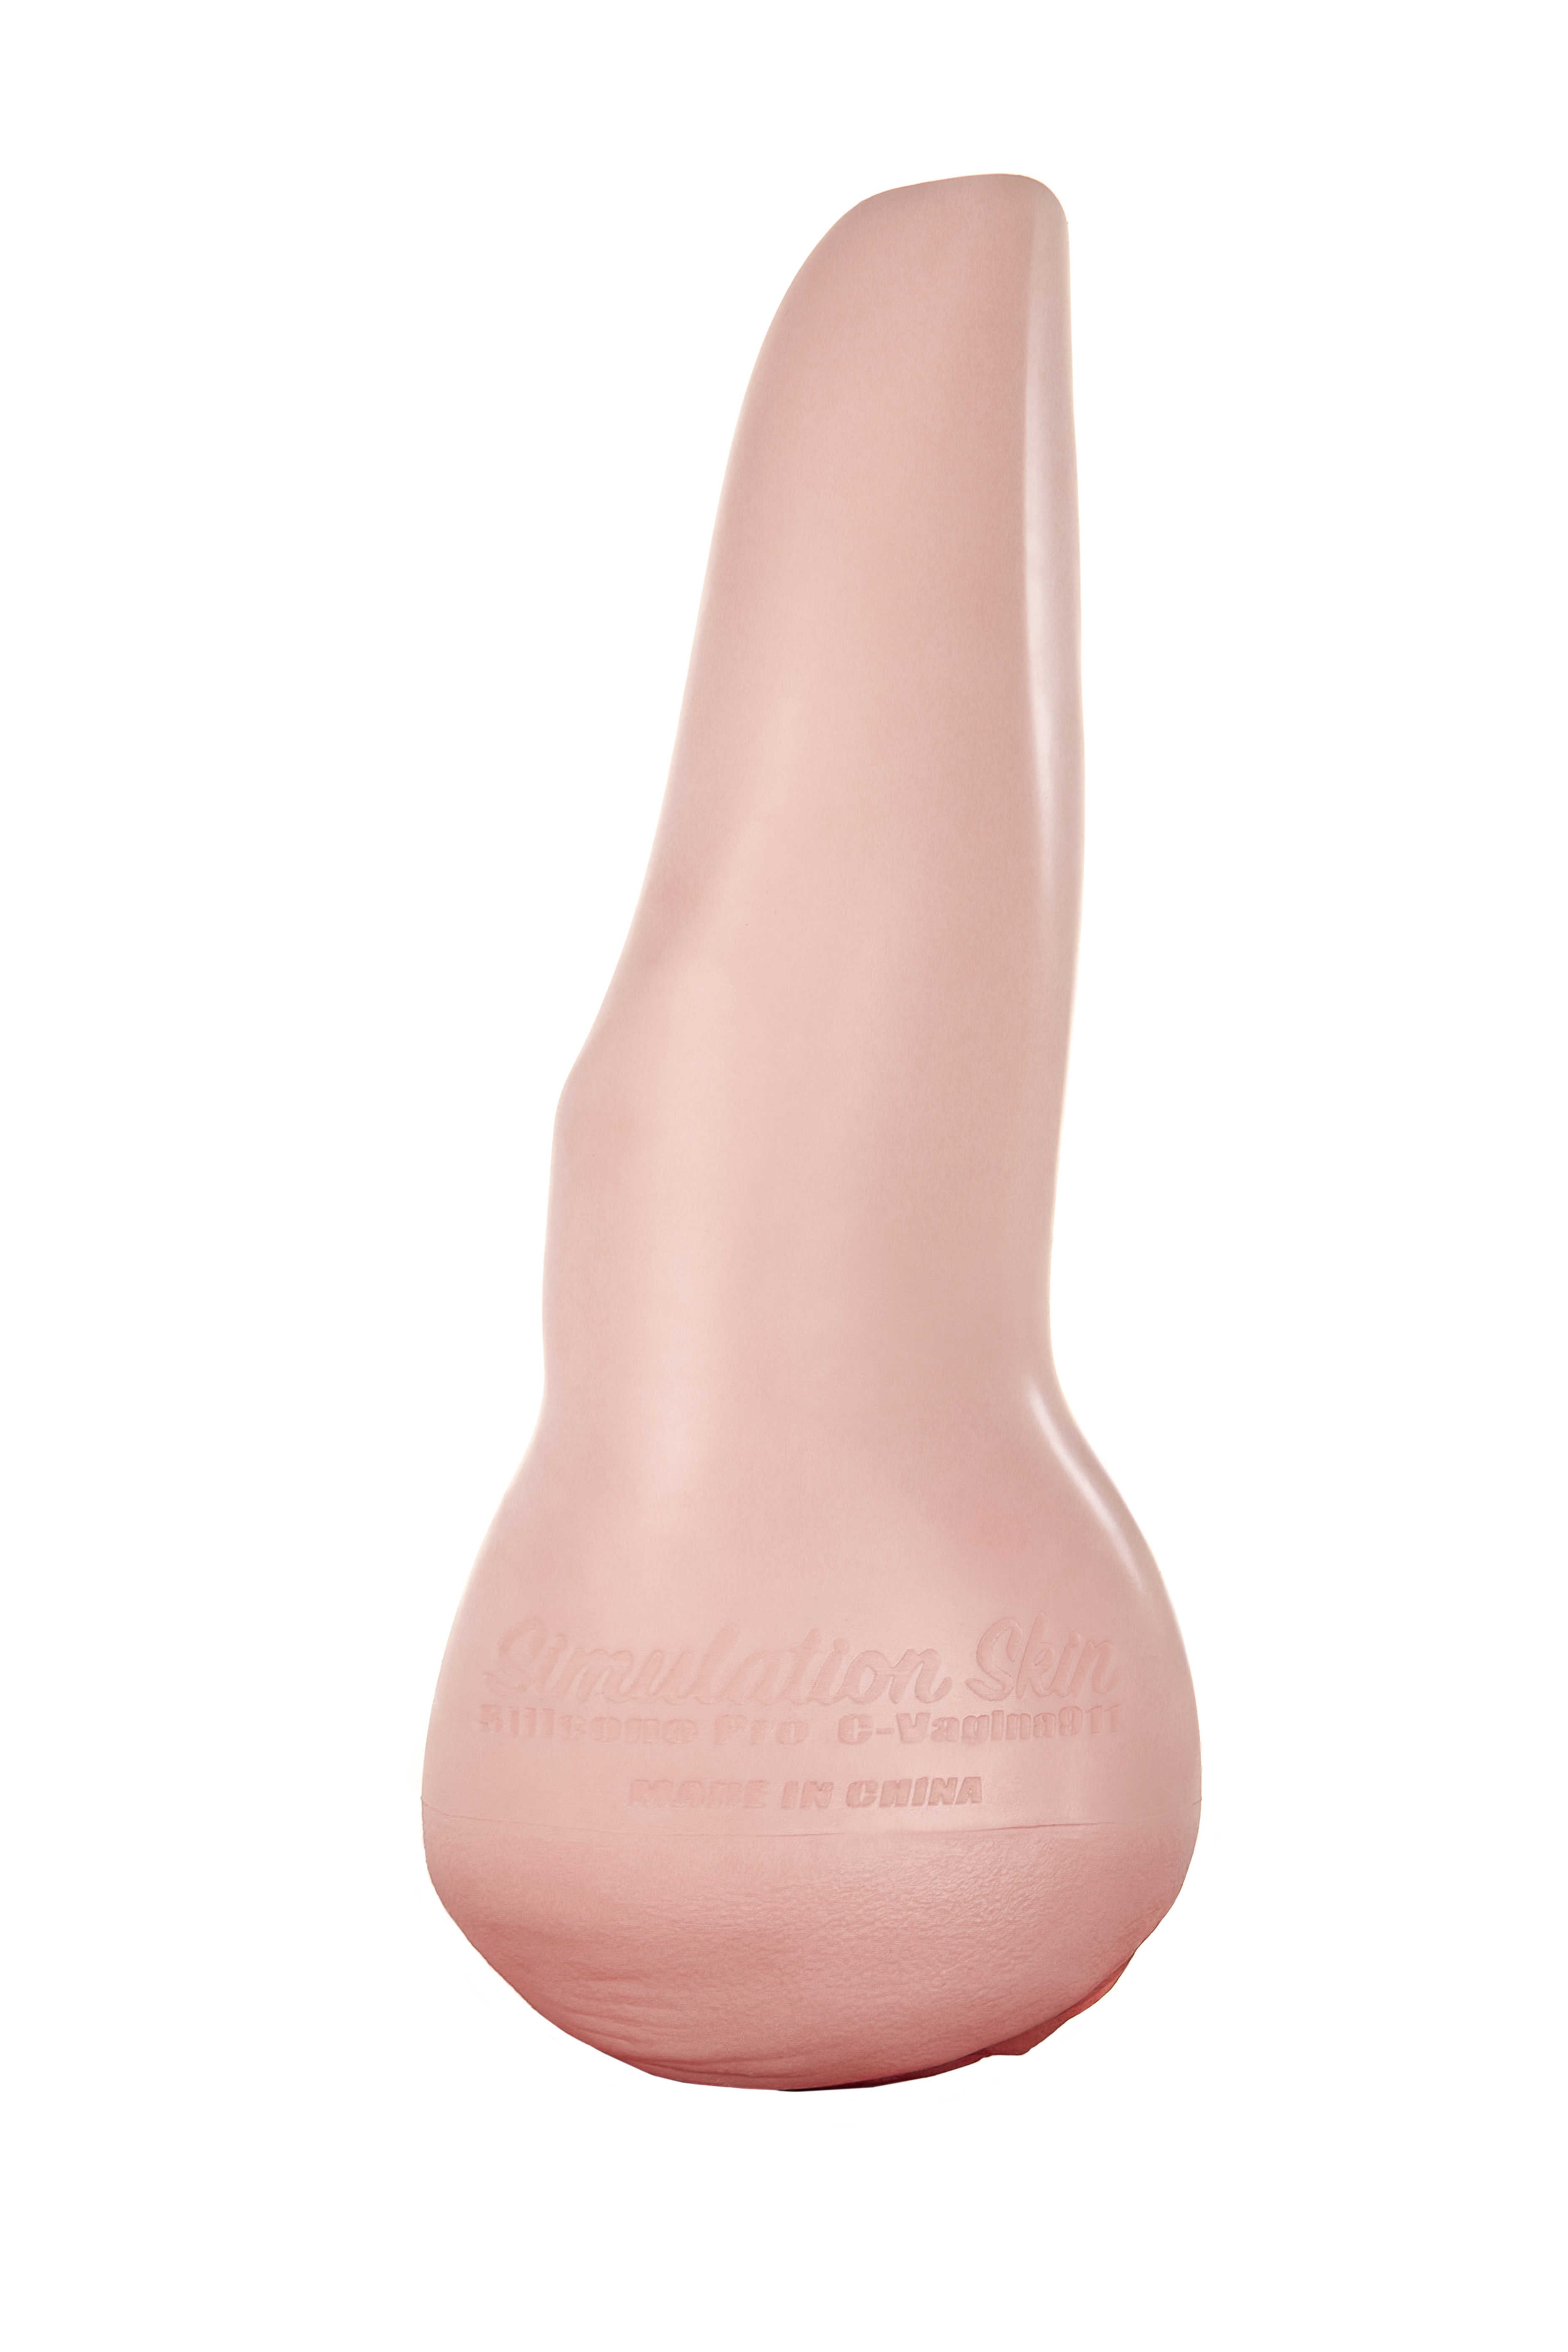 CLIMAX DOLL - Silicone Masturbation Cup Vagina 911